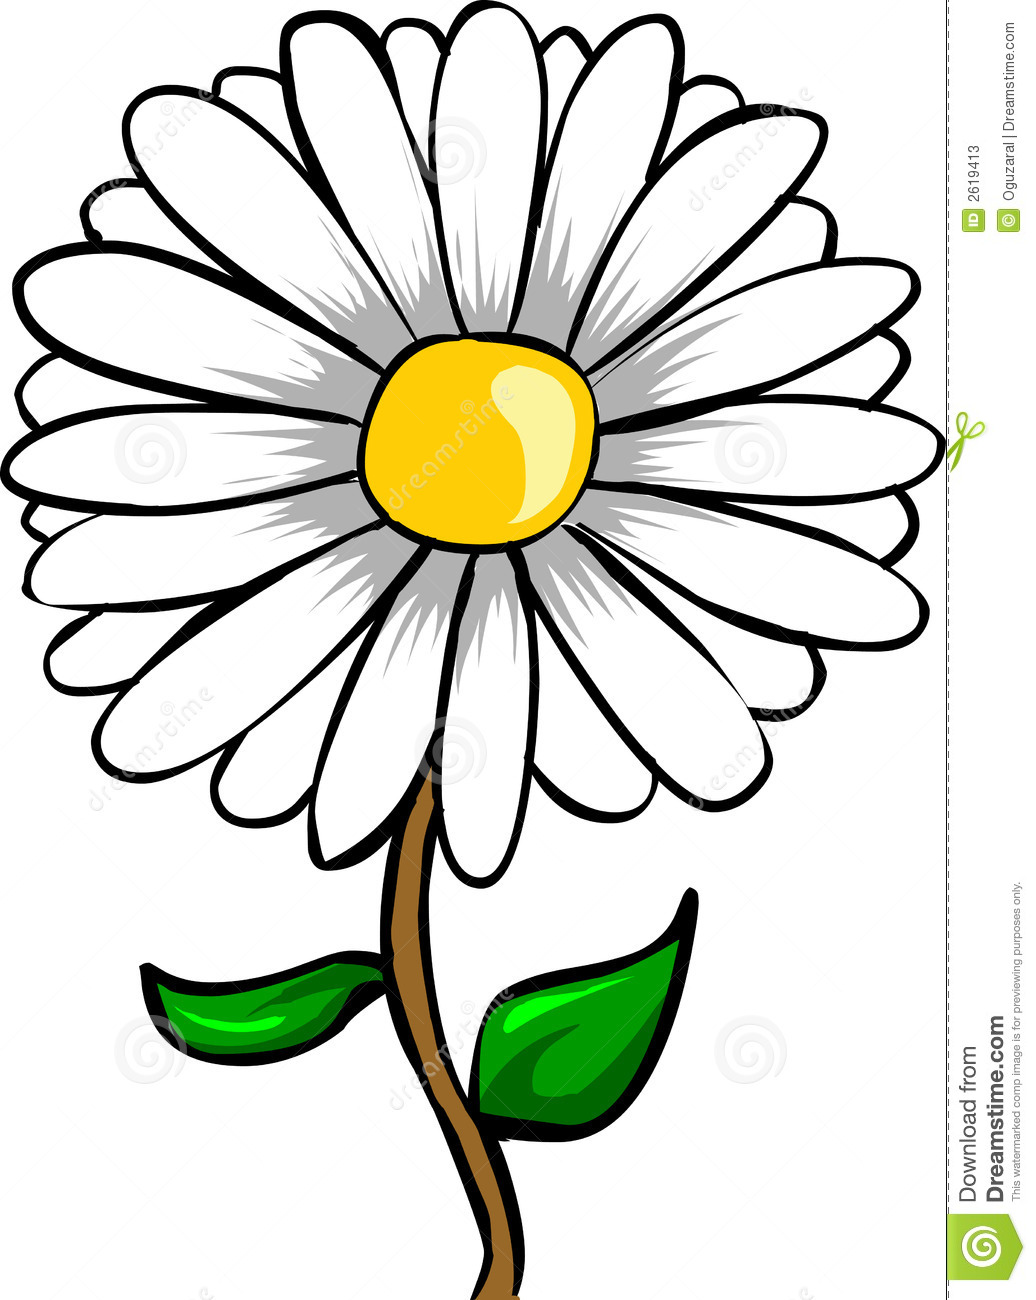 daisies clipart public domain